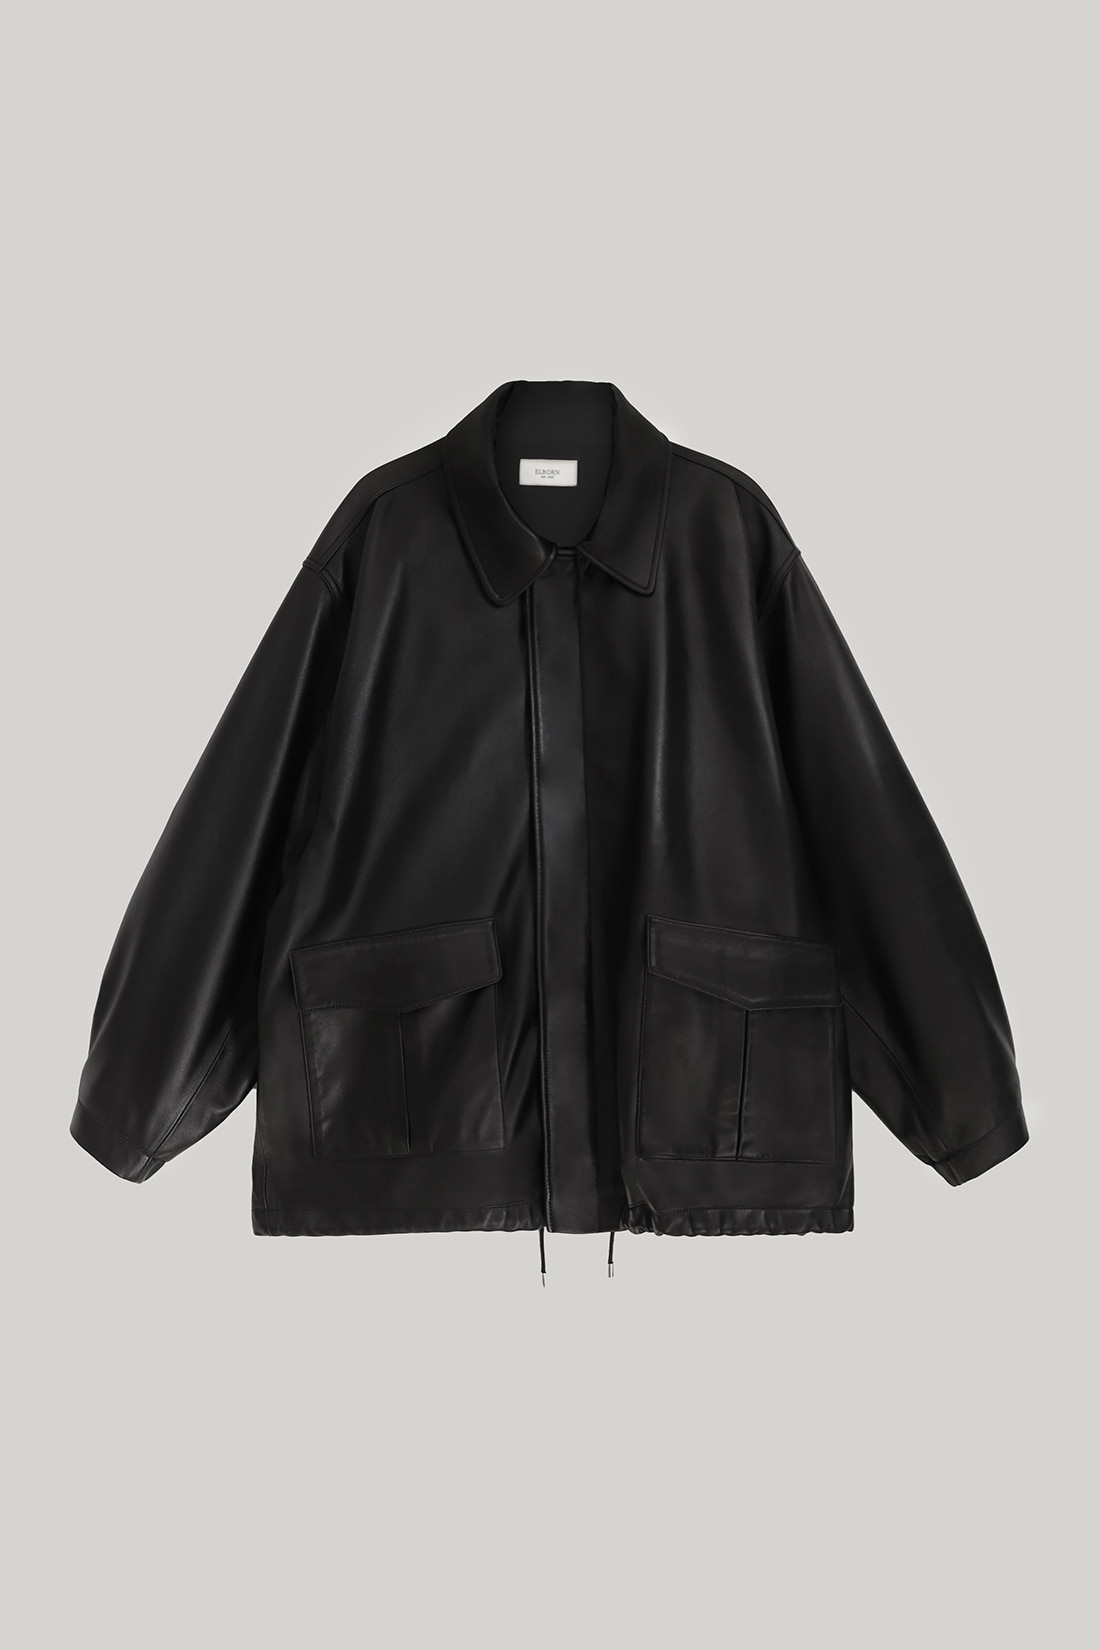 Vermon Safari Leather Jacket (Black)